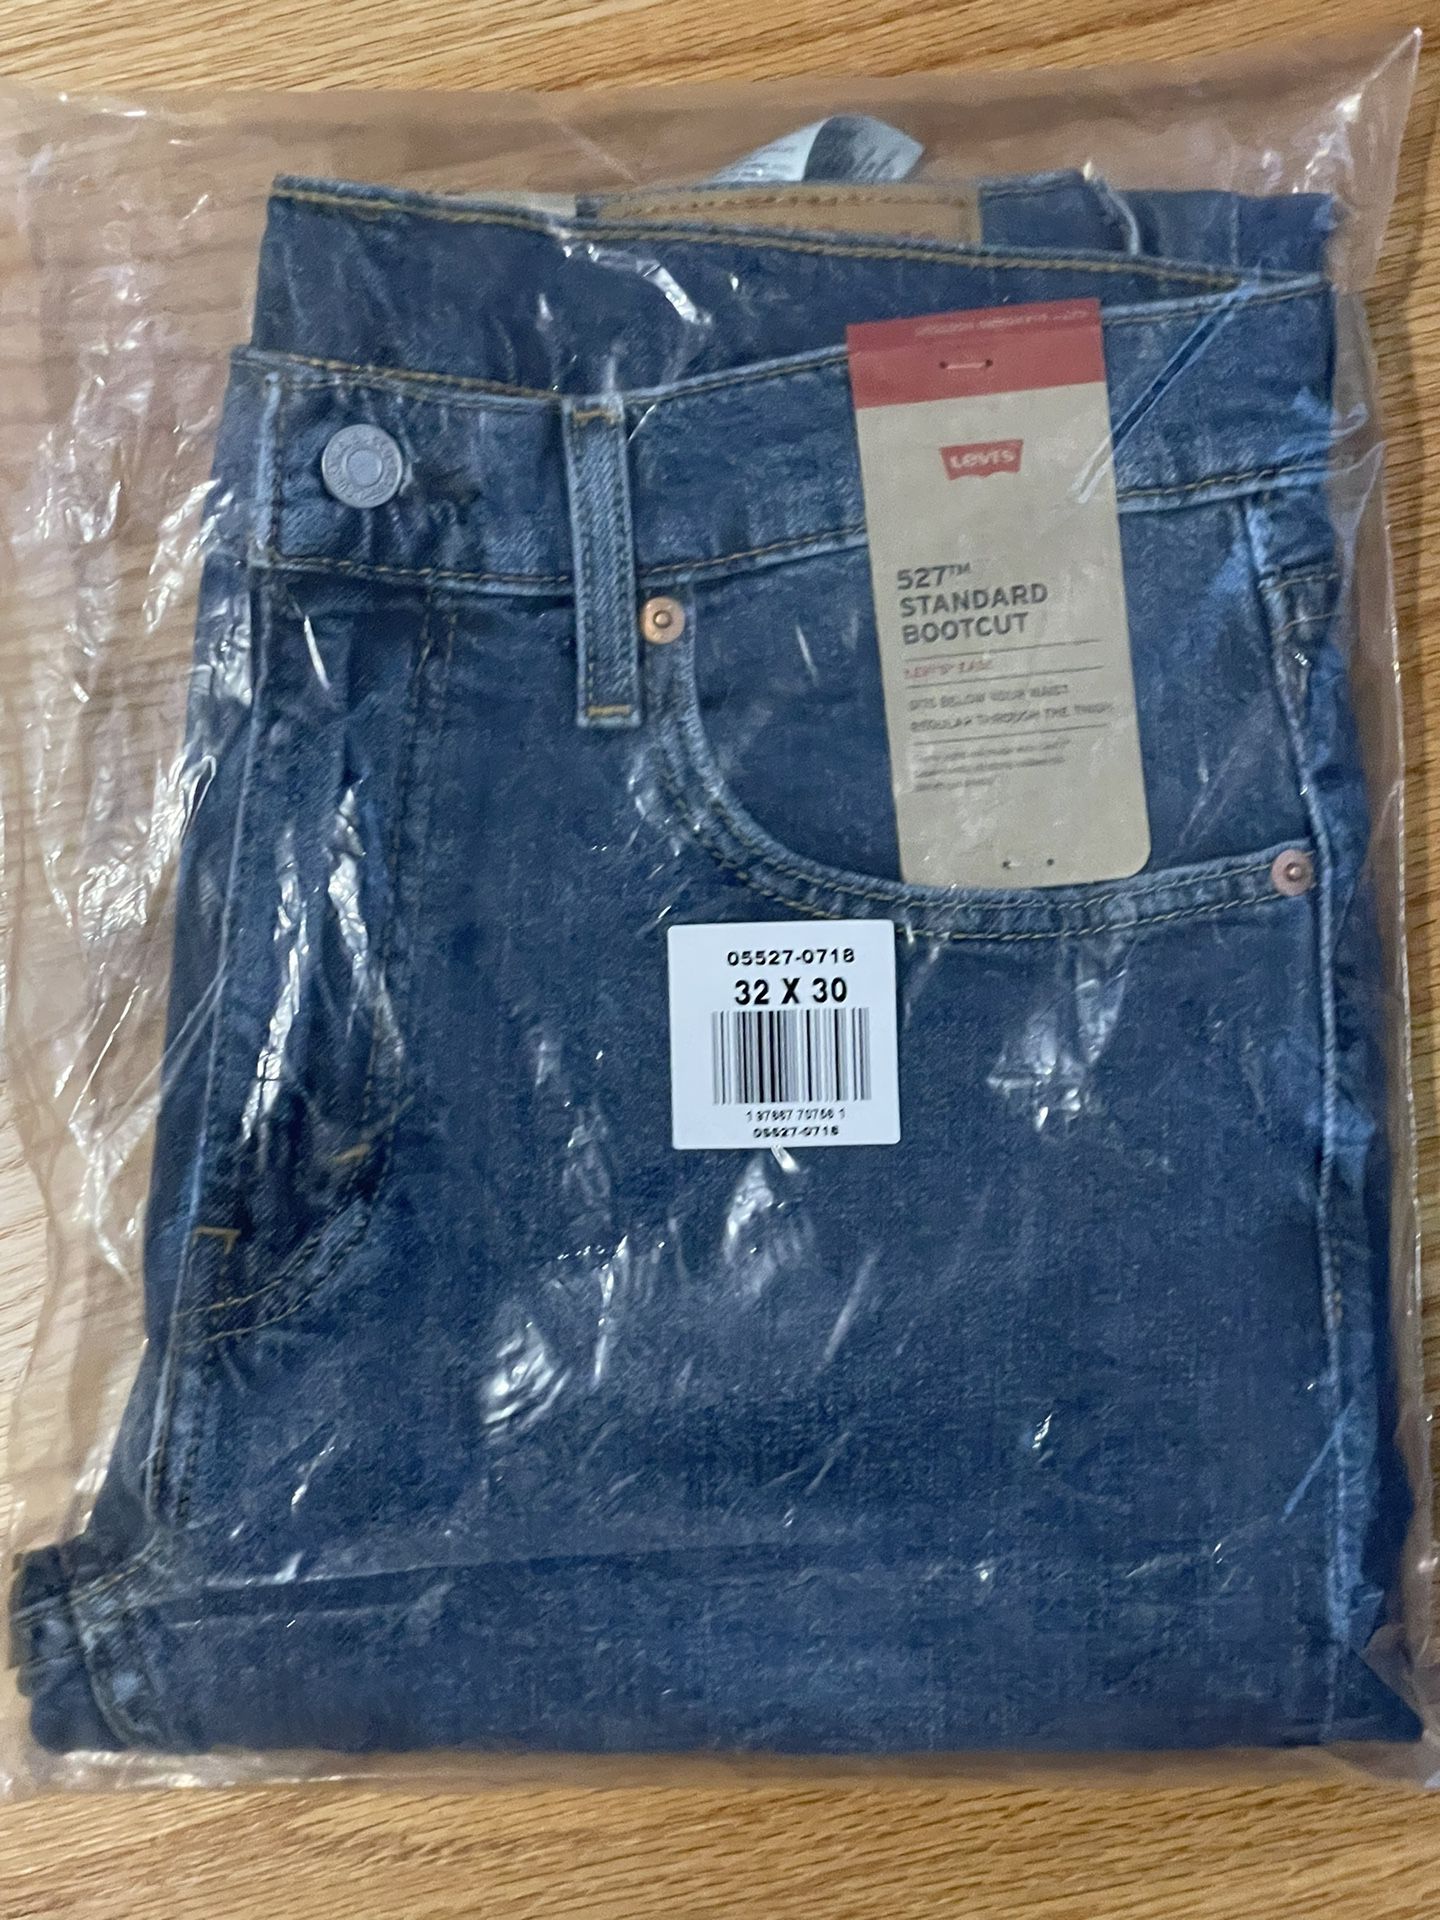 Levi’s Standard Bootcut 32x30 Jeans